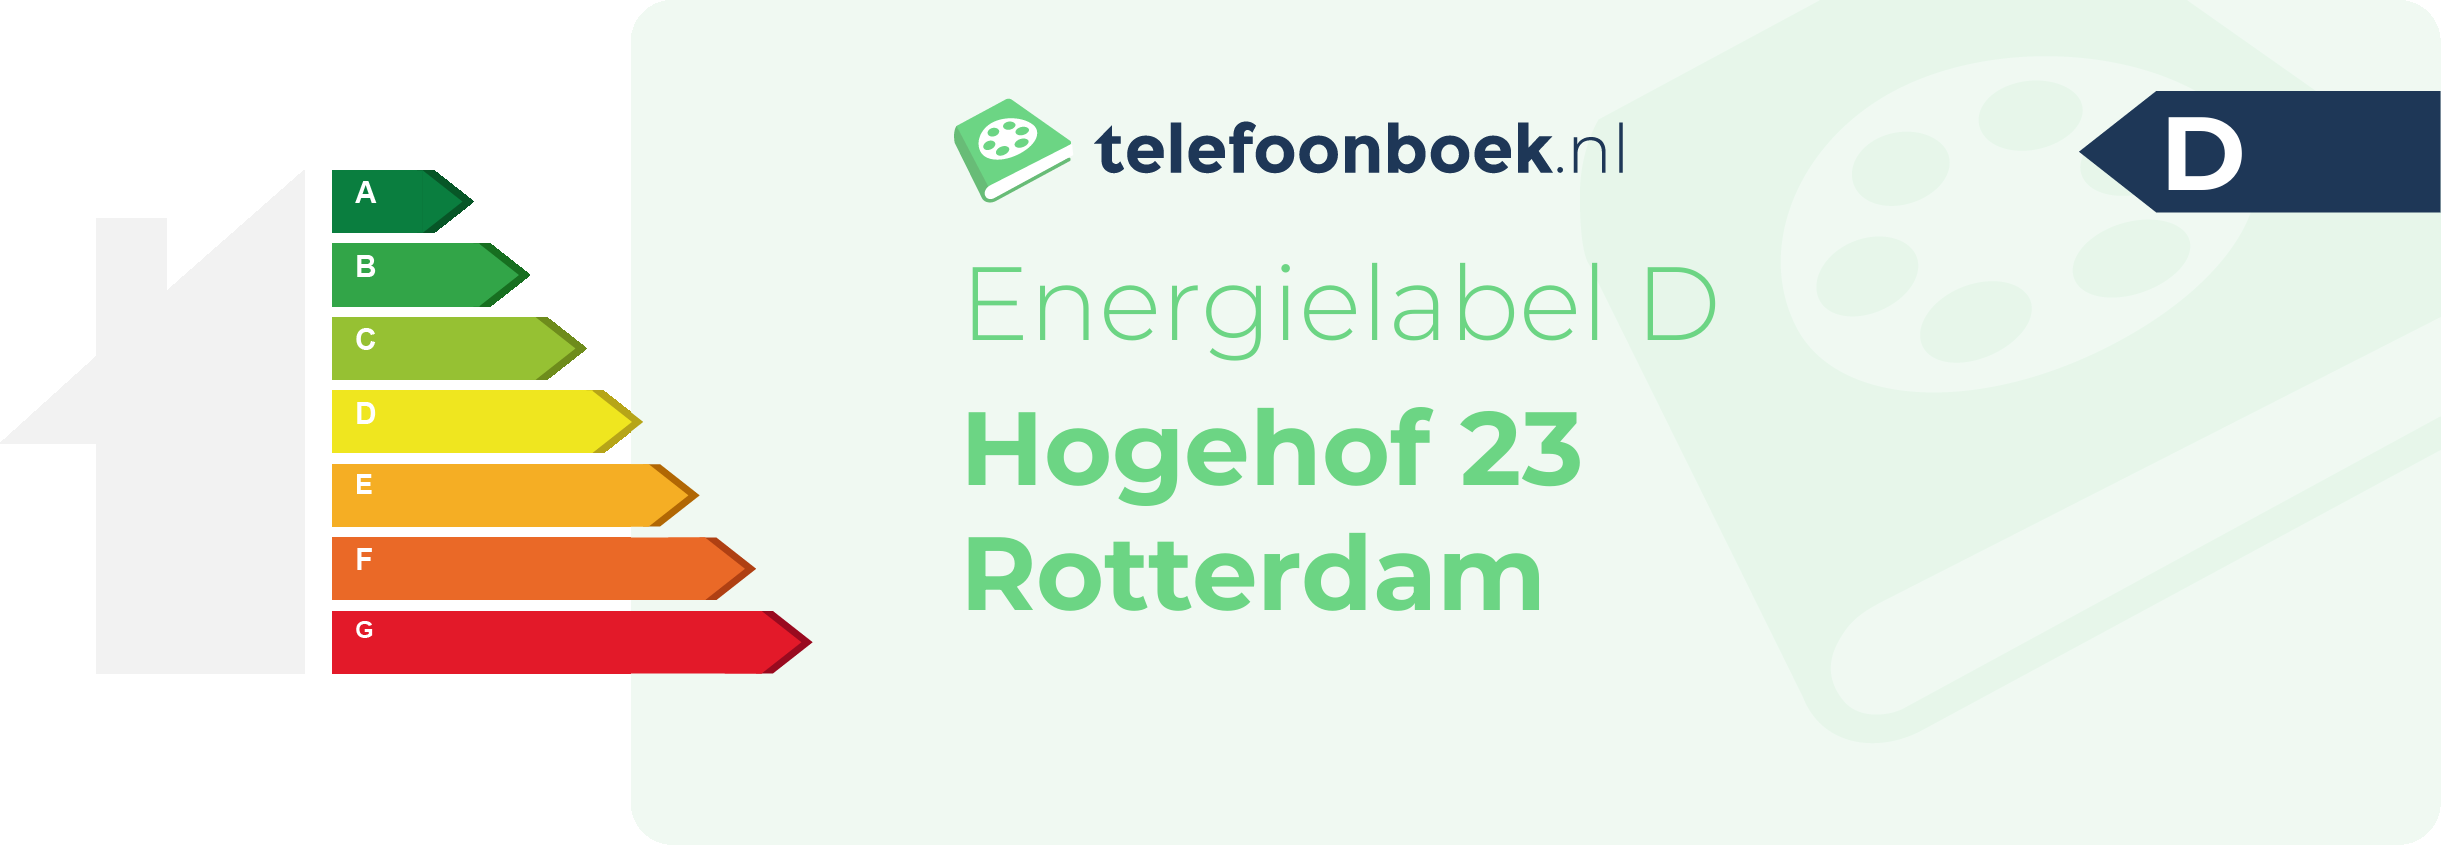 Energielabel Hogehof 23 Rotterdam